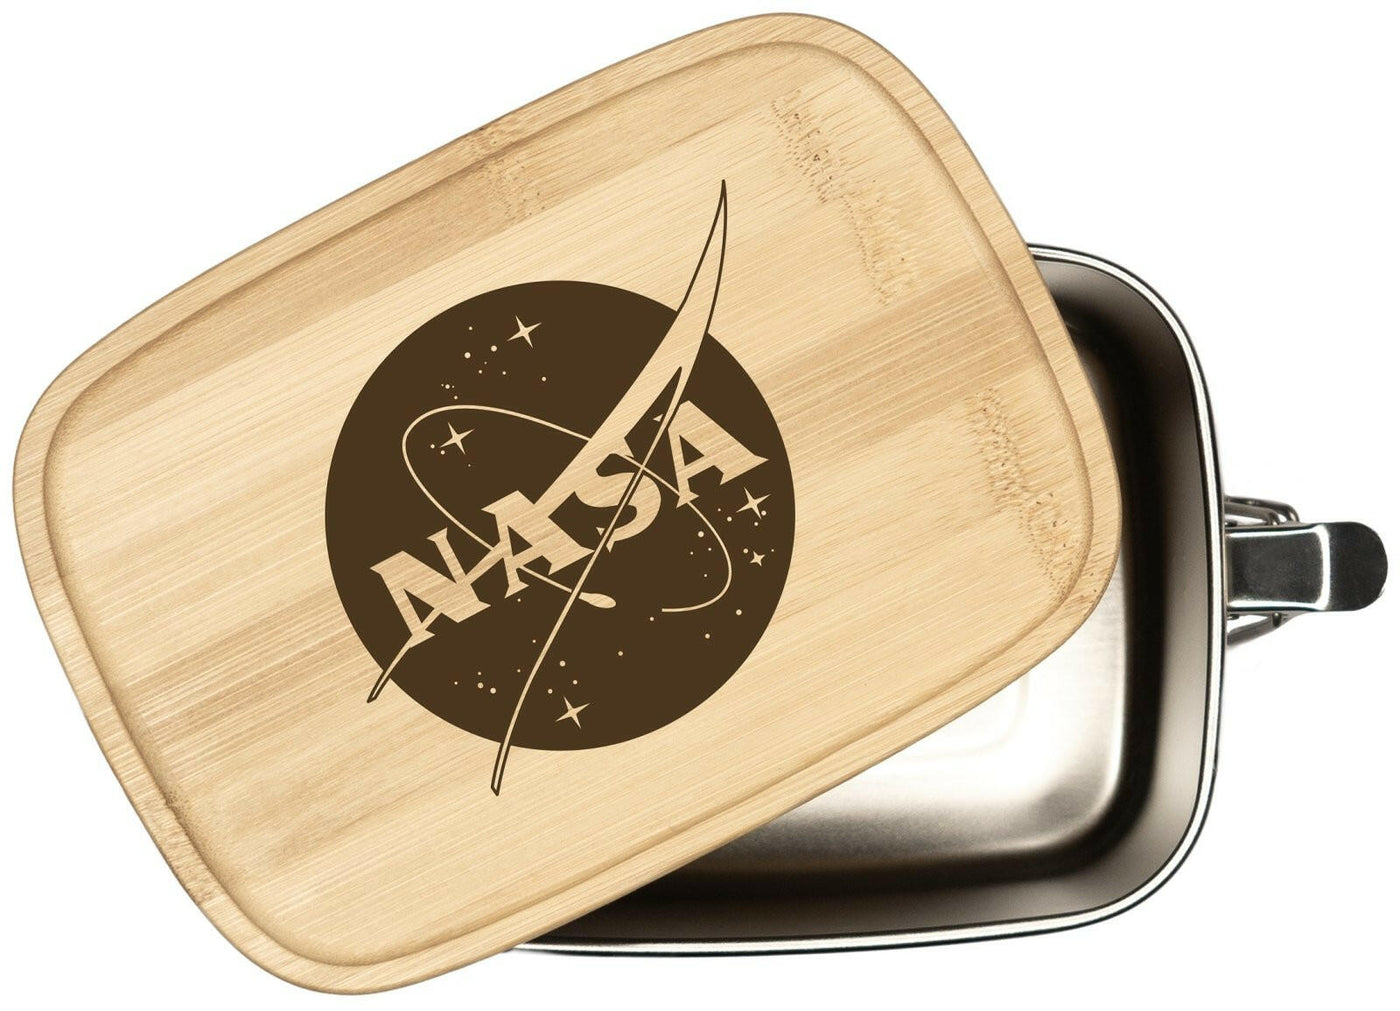 Bild: Brotdose - NASA Meatball Logo - Edelstahl mit Bambusdeckel Geschenkidee